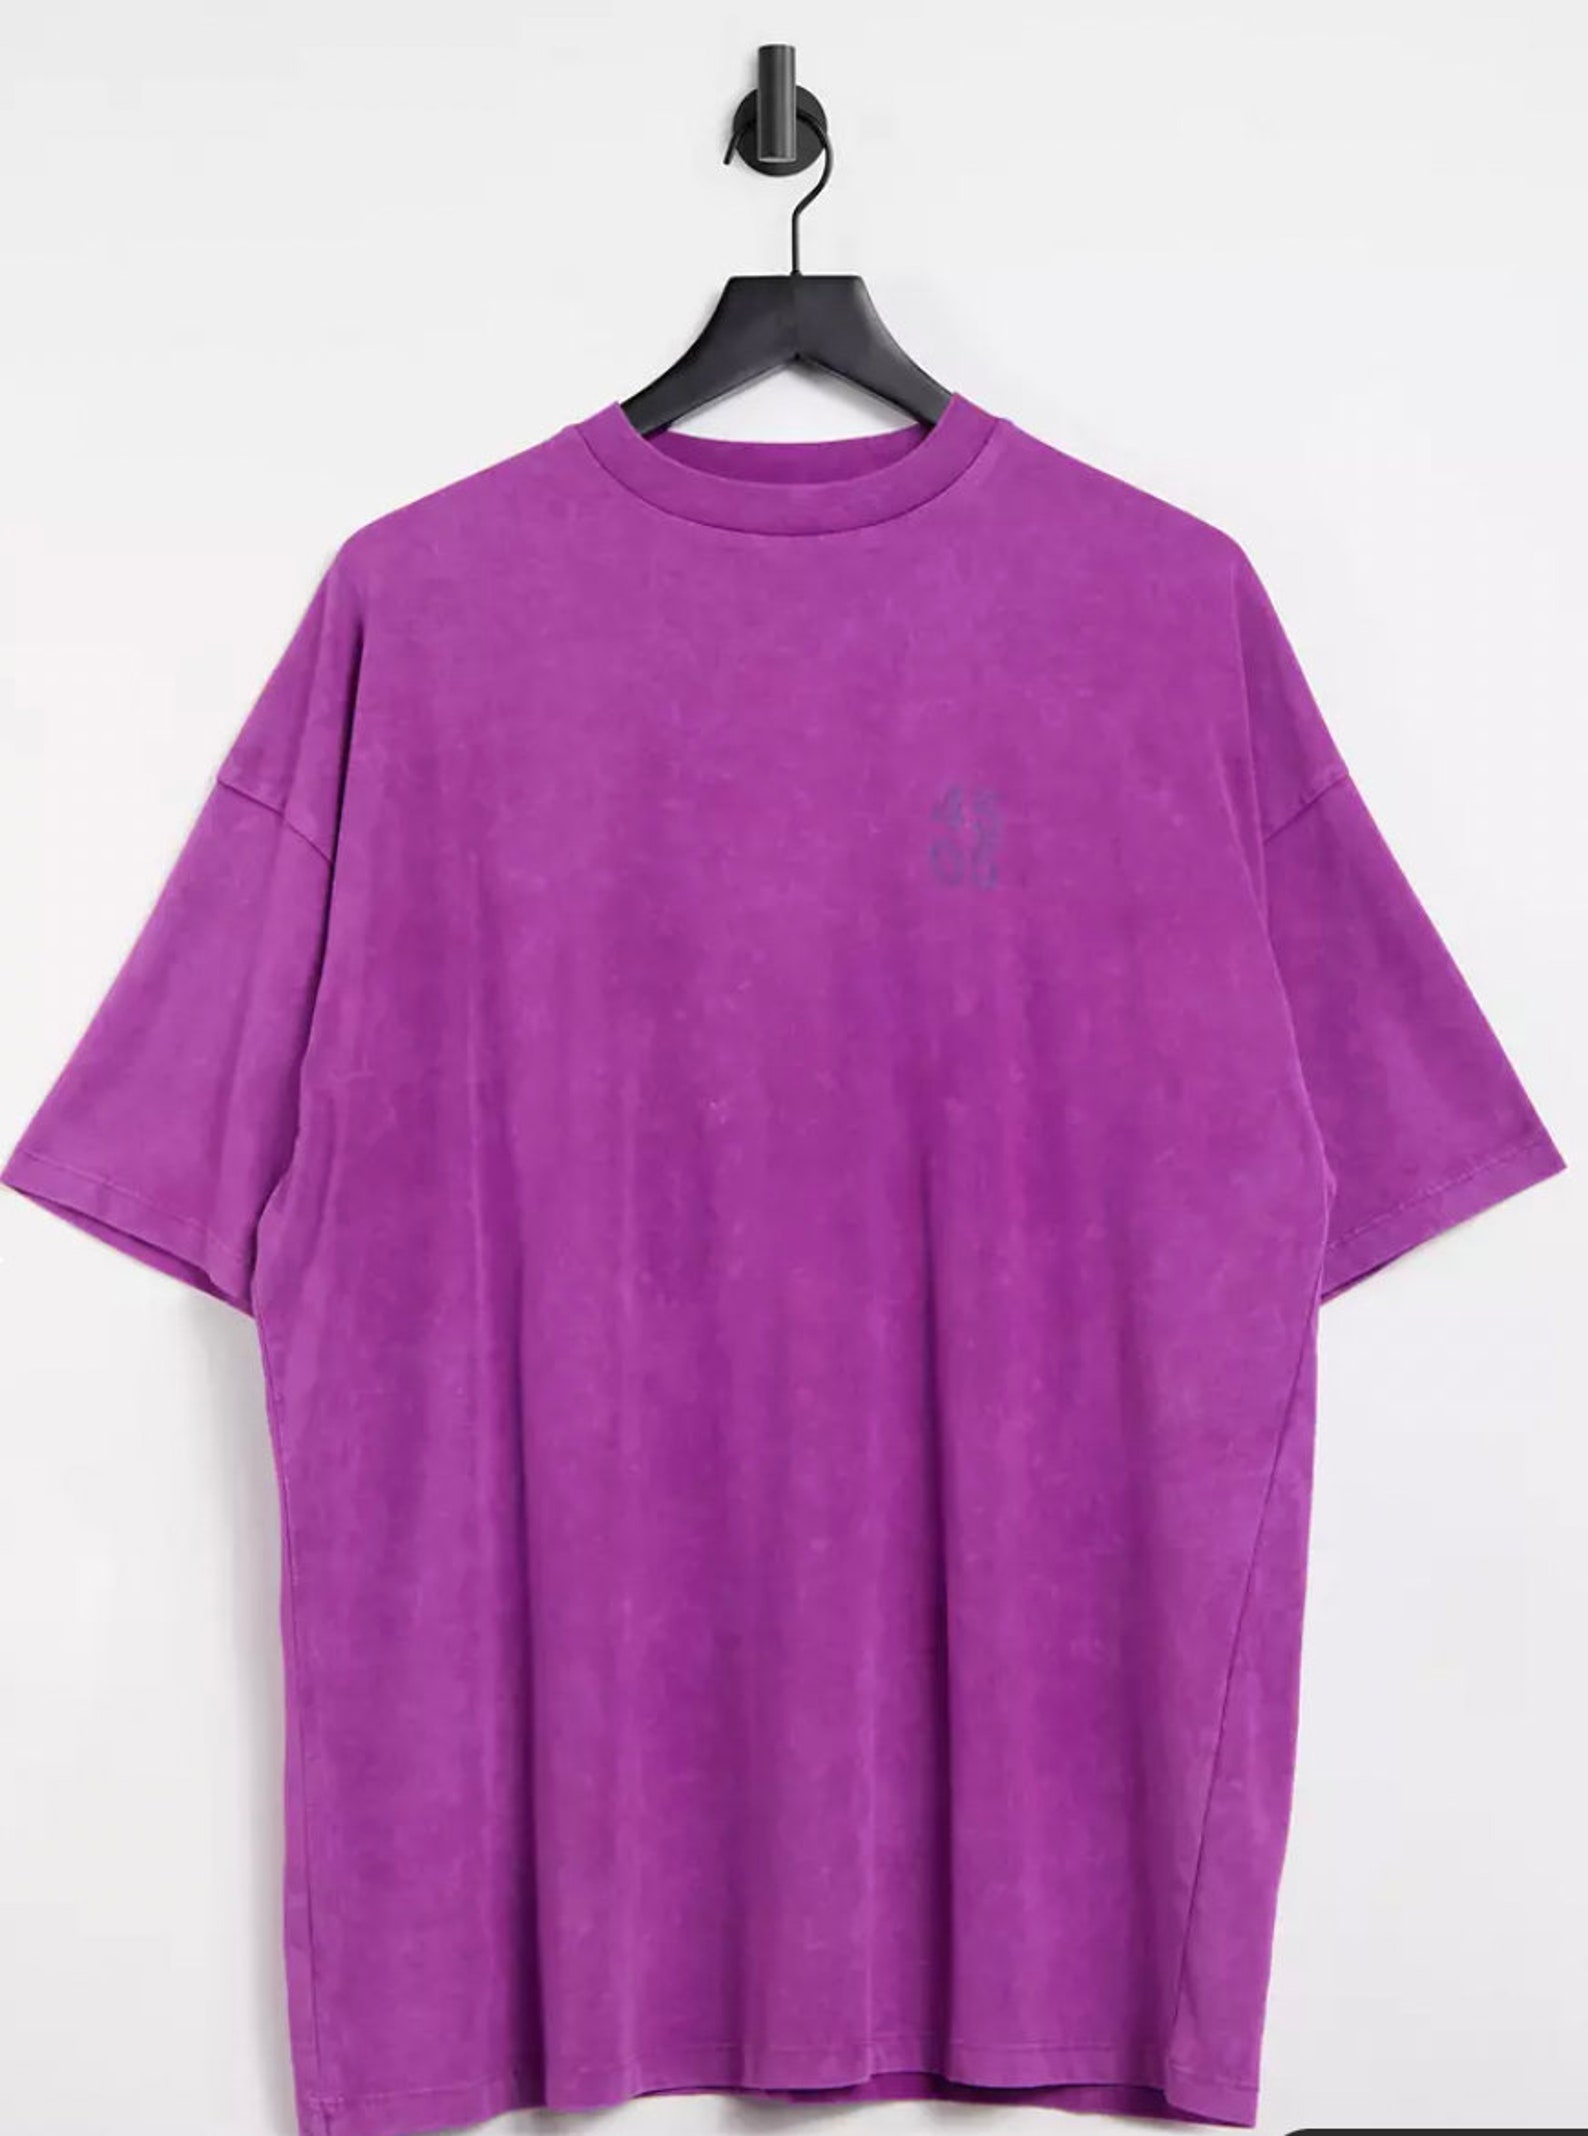 Oversized t-shirt in plum wash | Etsy